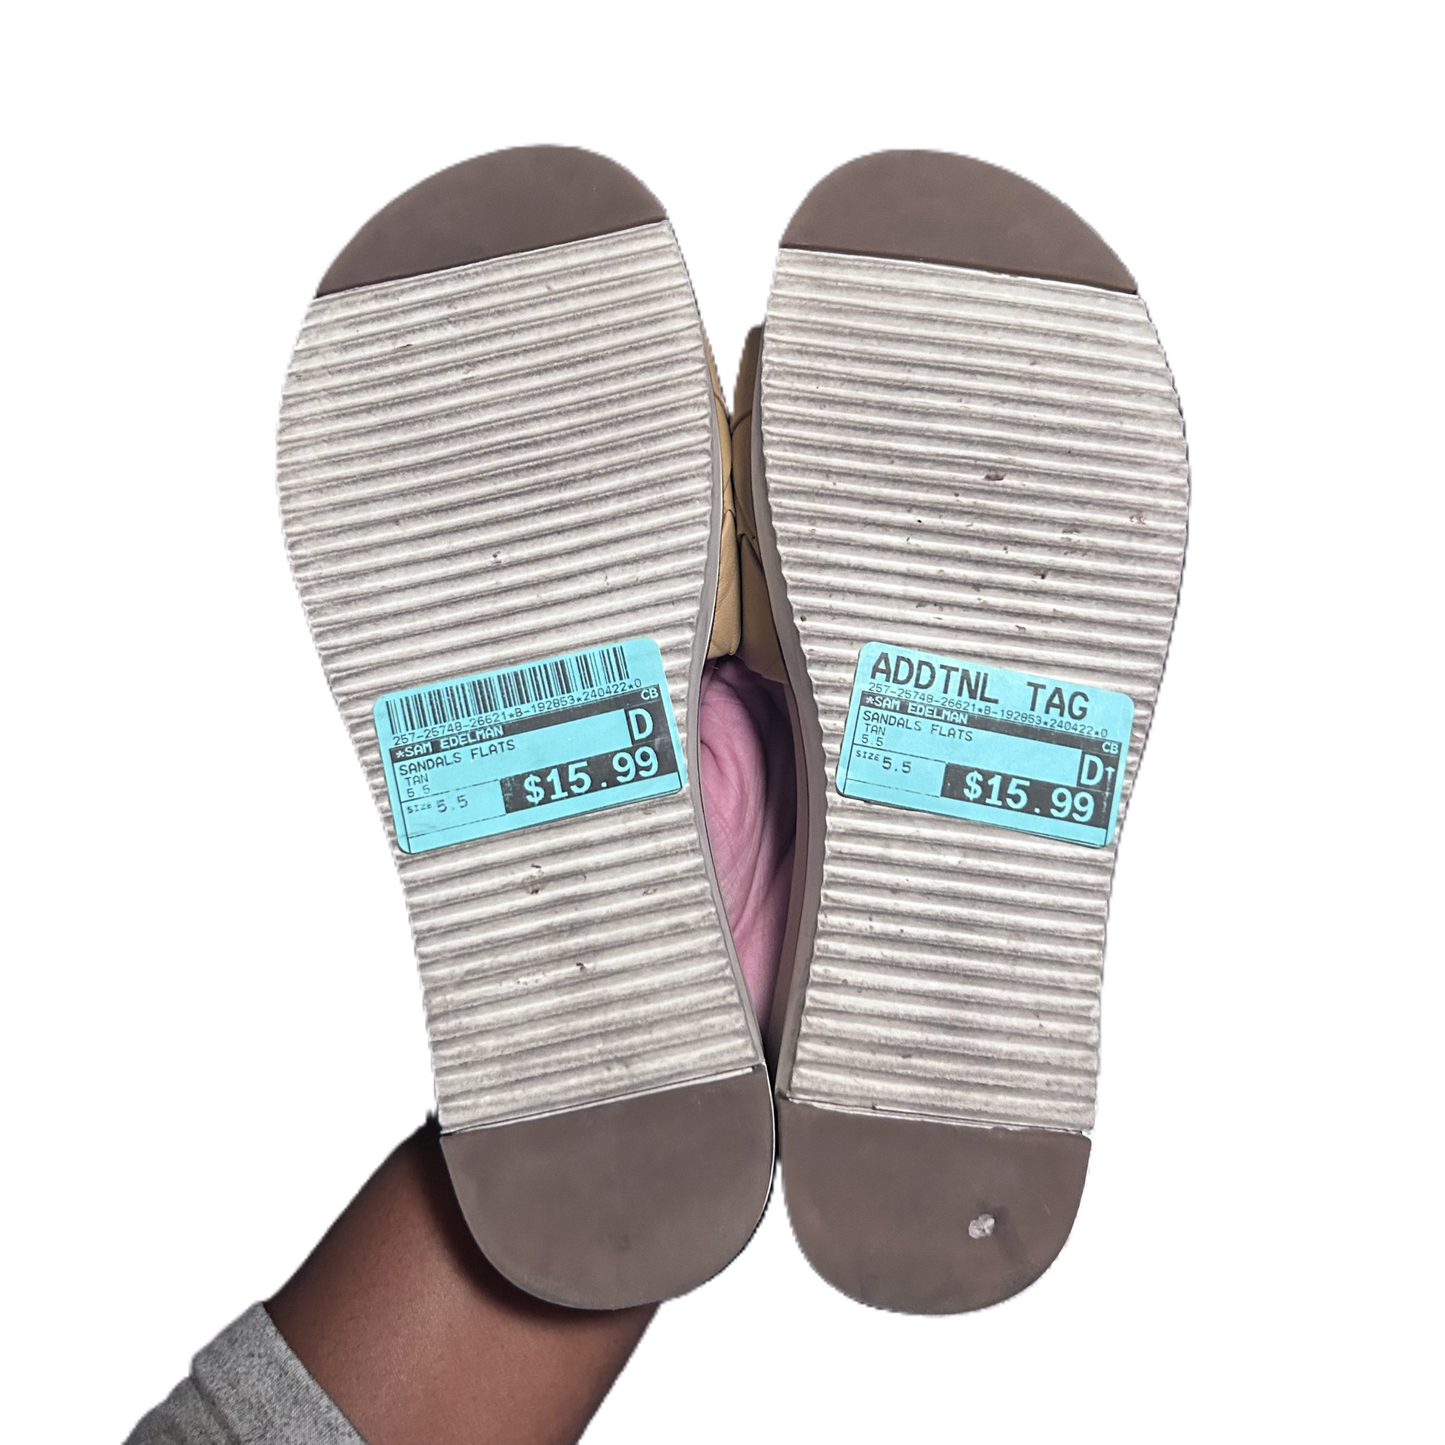 Sandals Flats By Sam Edelman  Size: 5.5